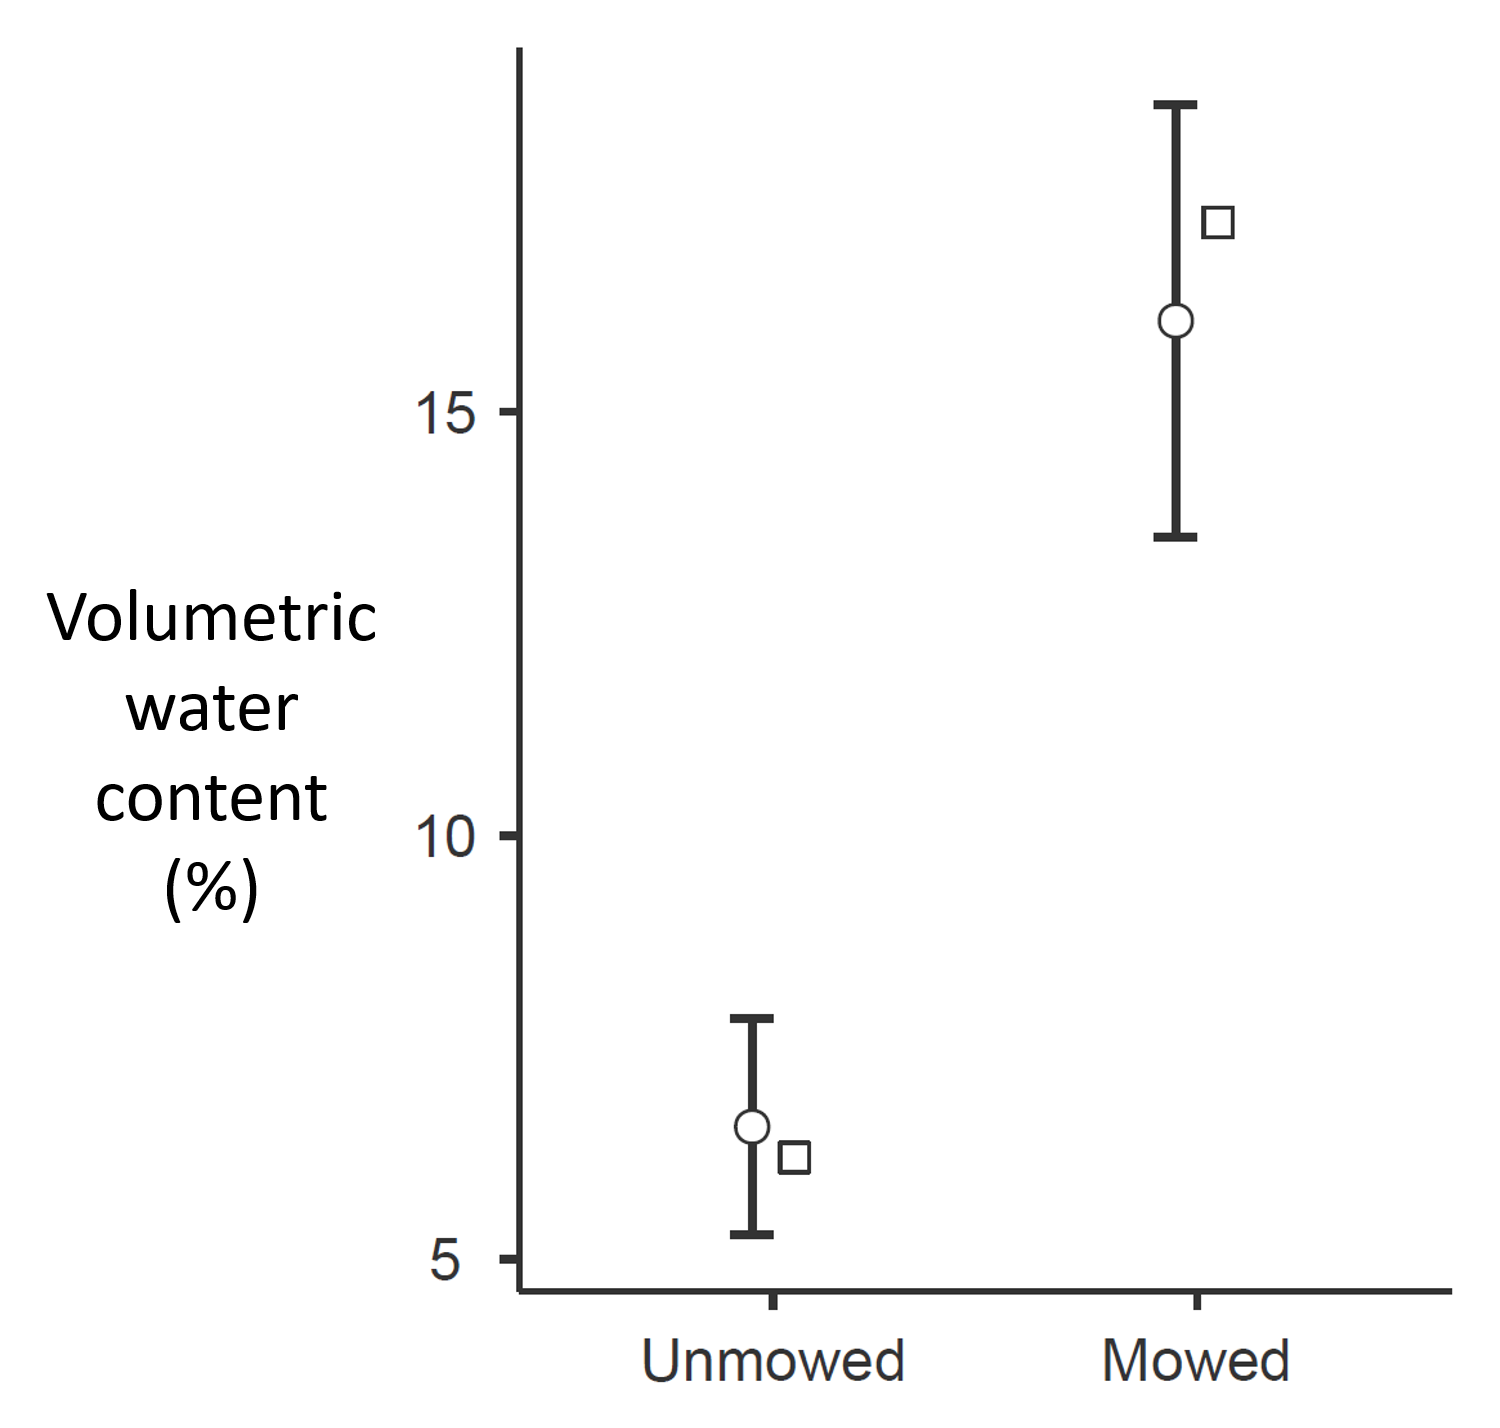 Soil volumetric water content in mowed and unmowed plots